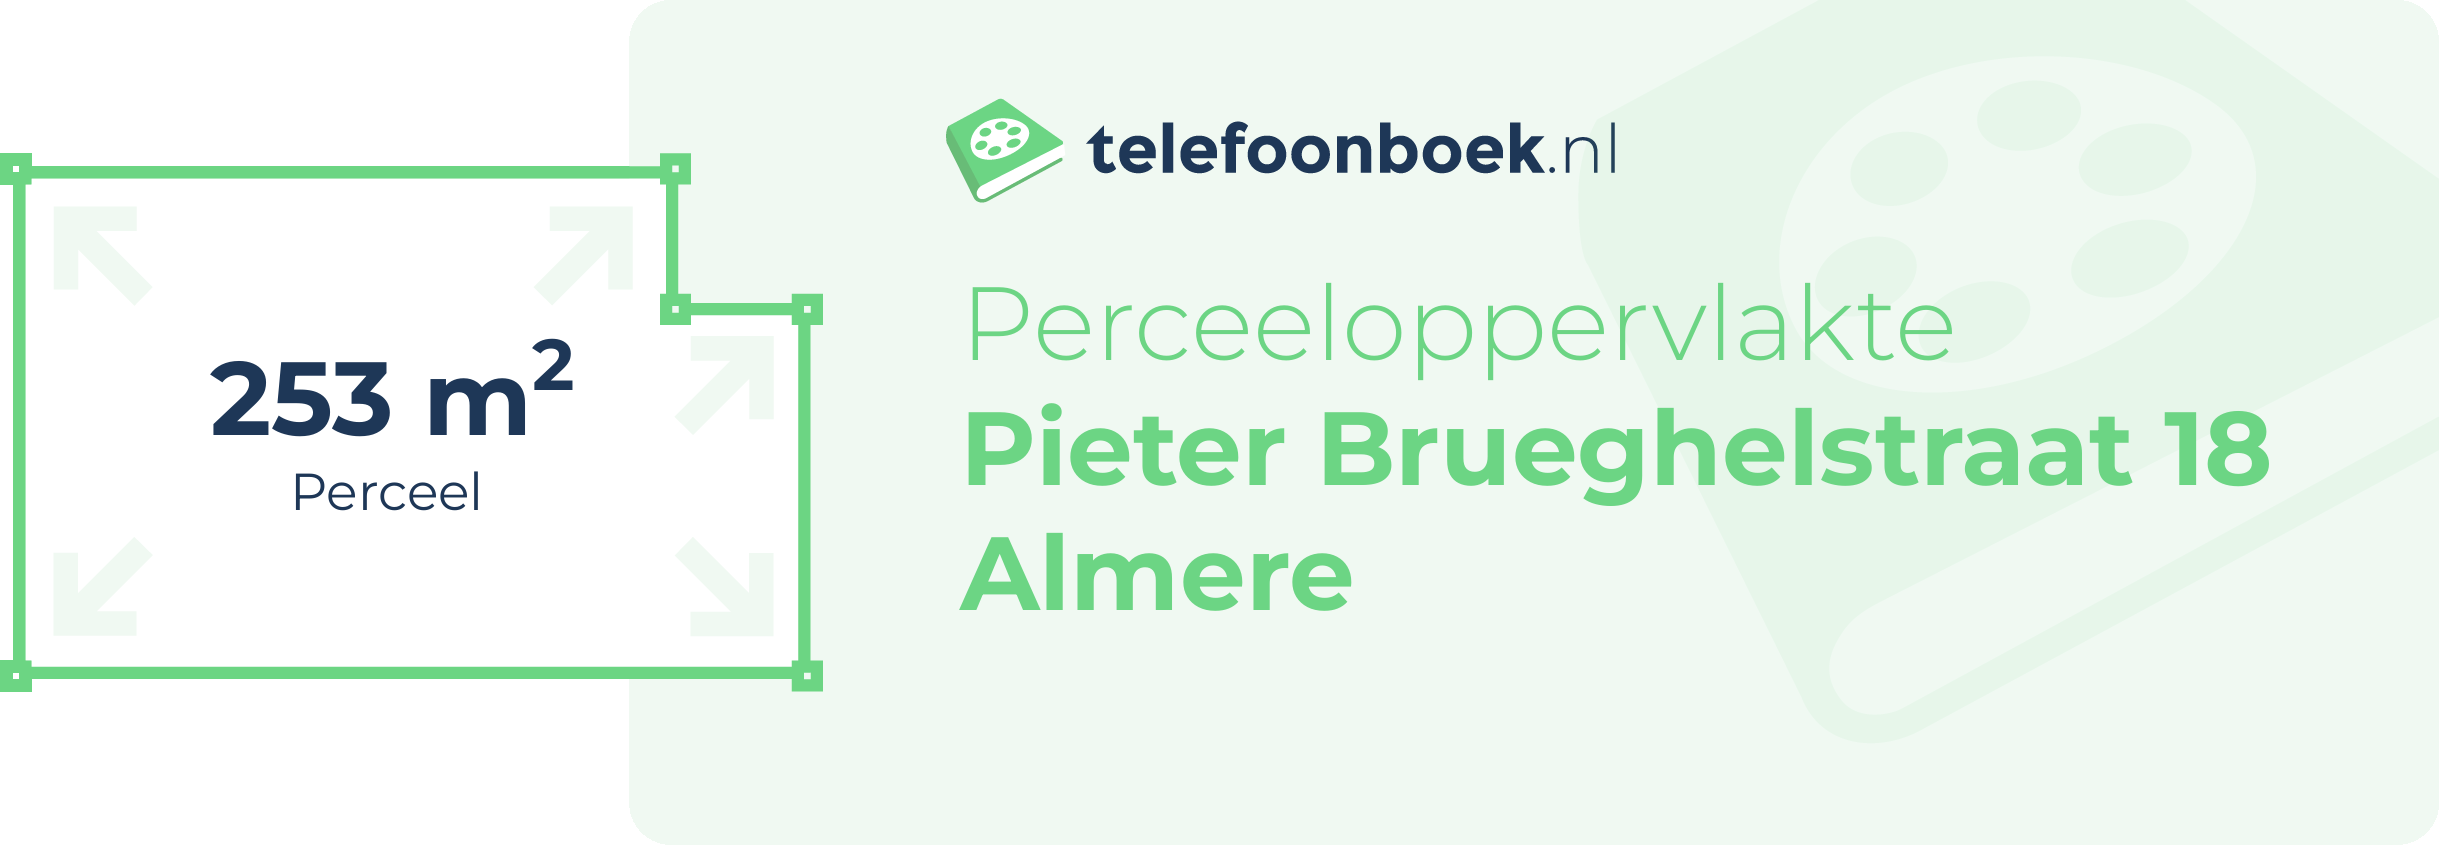 Perceeloppervlakte Pieter Brueghelstraat 18 Almere